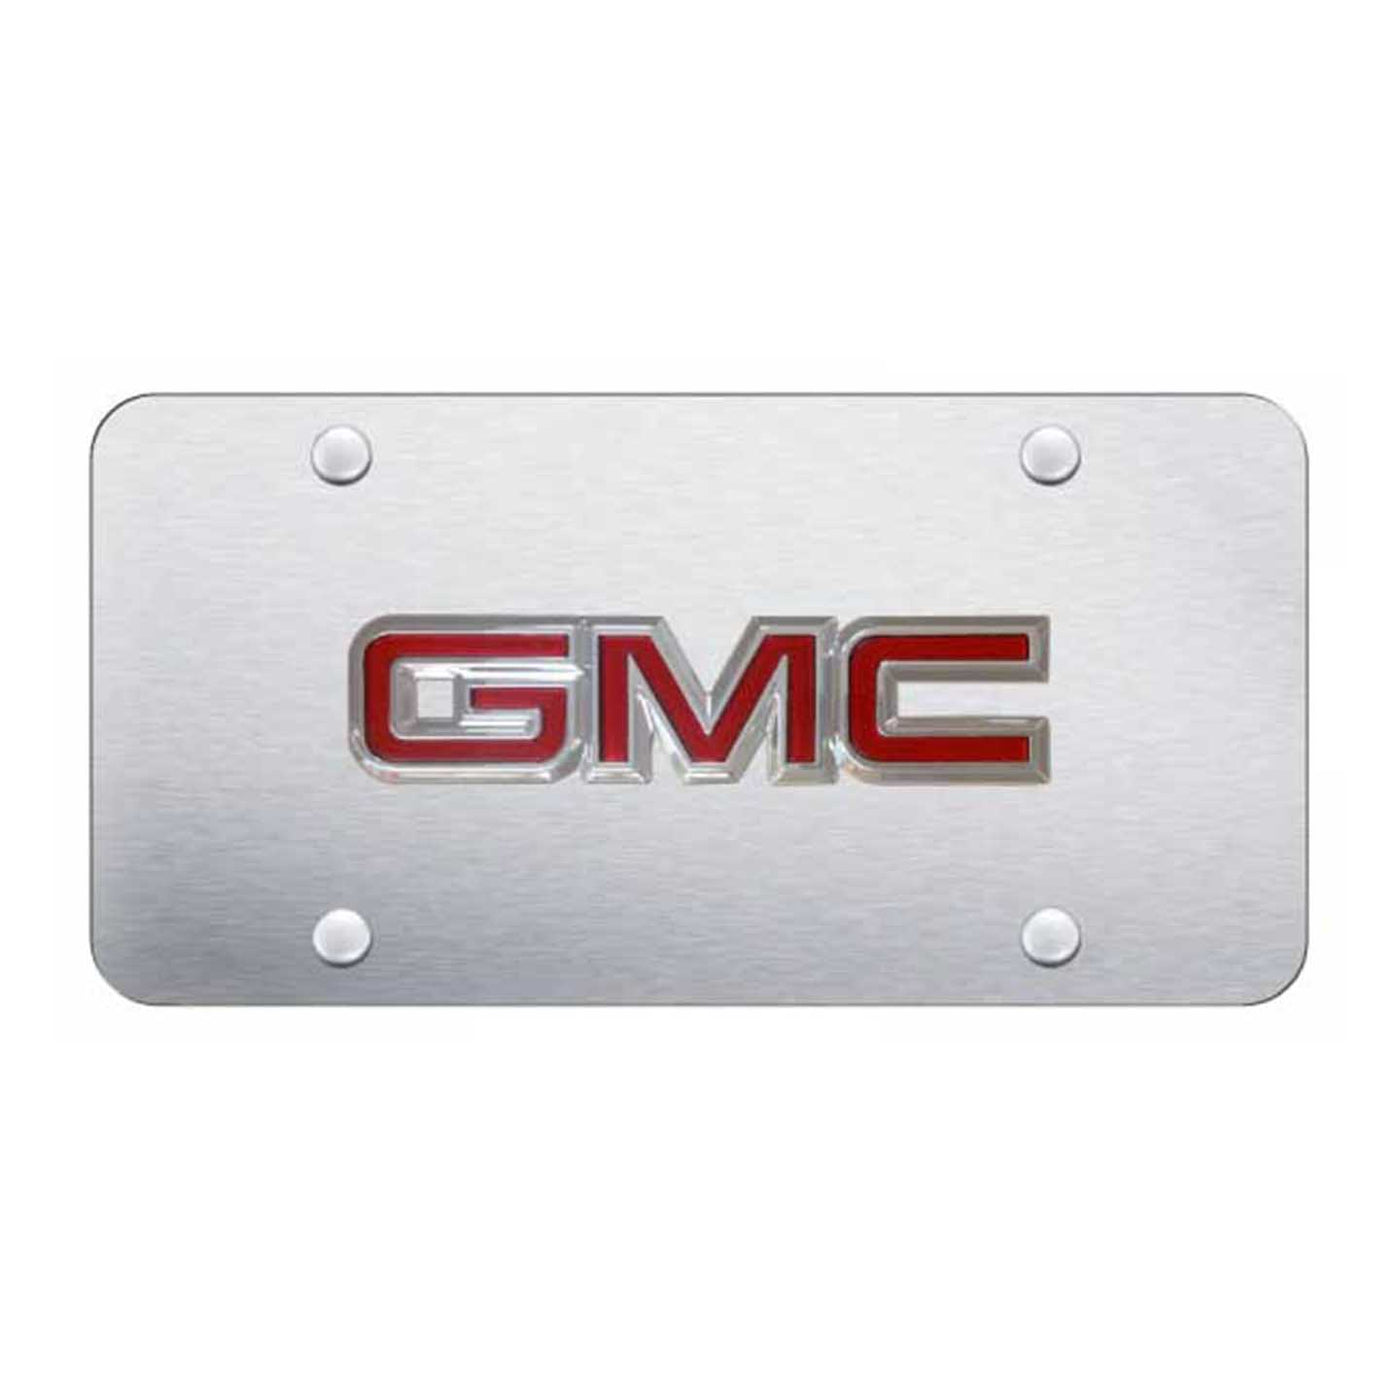 GMC OEM License Plate - Chrome on Brushed